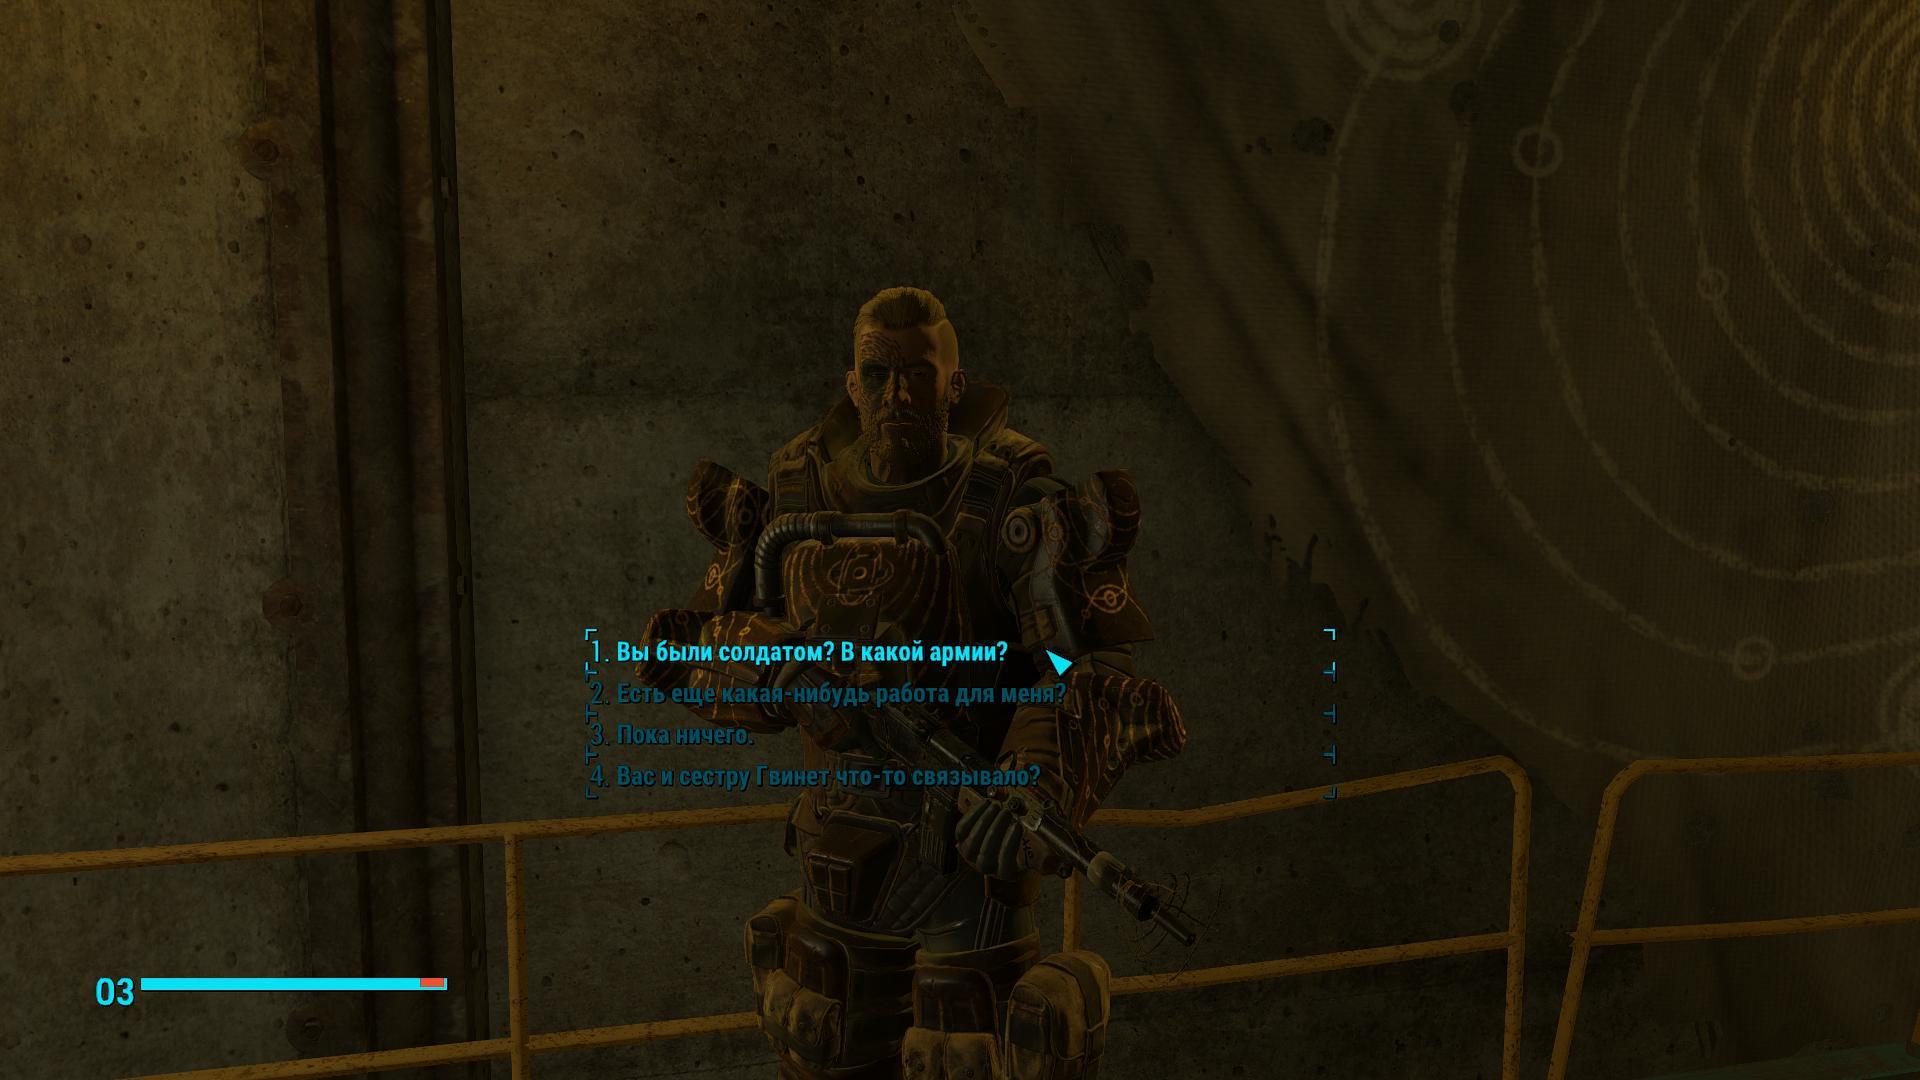 Фоллаут 4 мод фулл диалог Интерфейс. Fallout 4 Full Dialogue interface. Интерфейс Fallout PNG. Dialogue interface. Dialogue mod